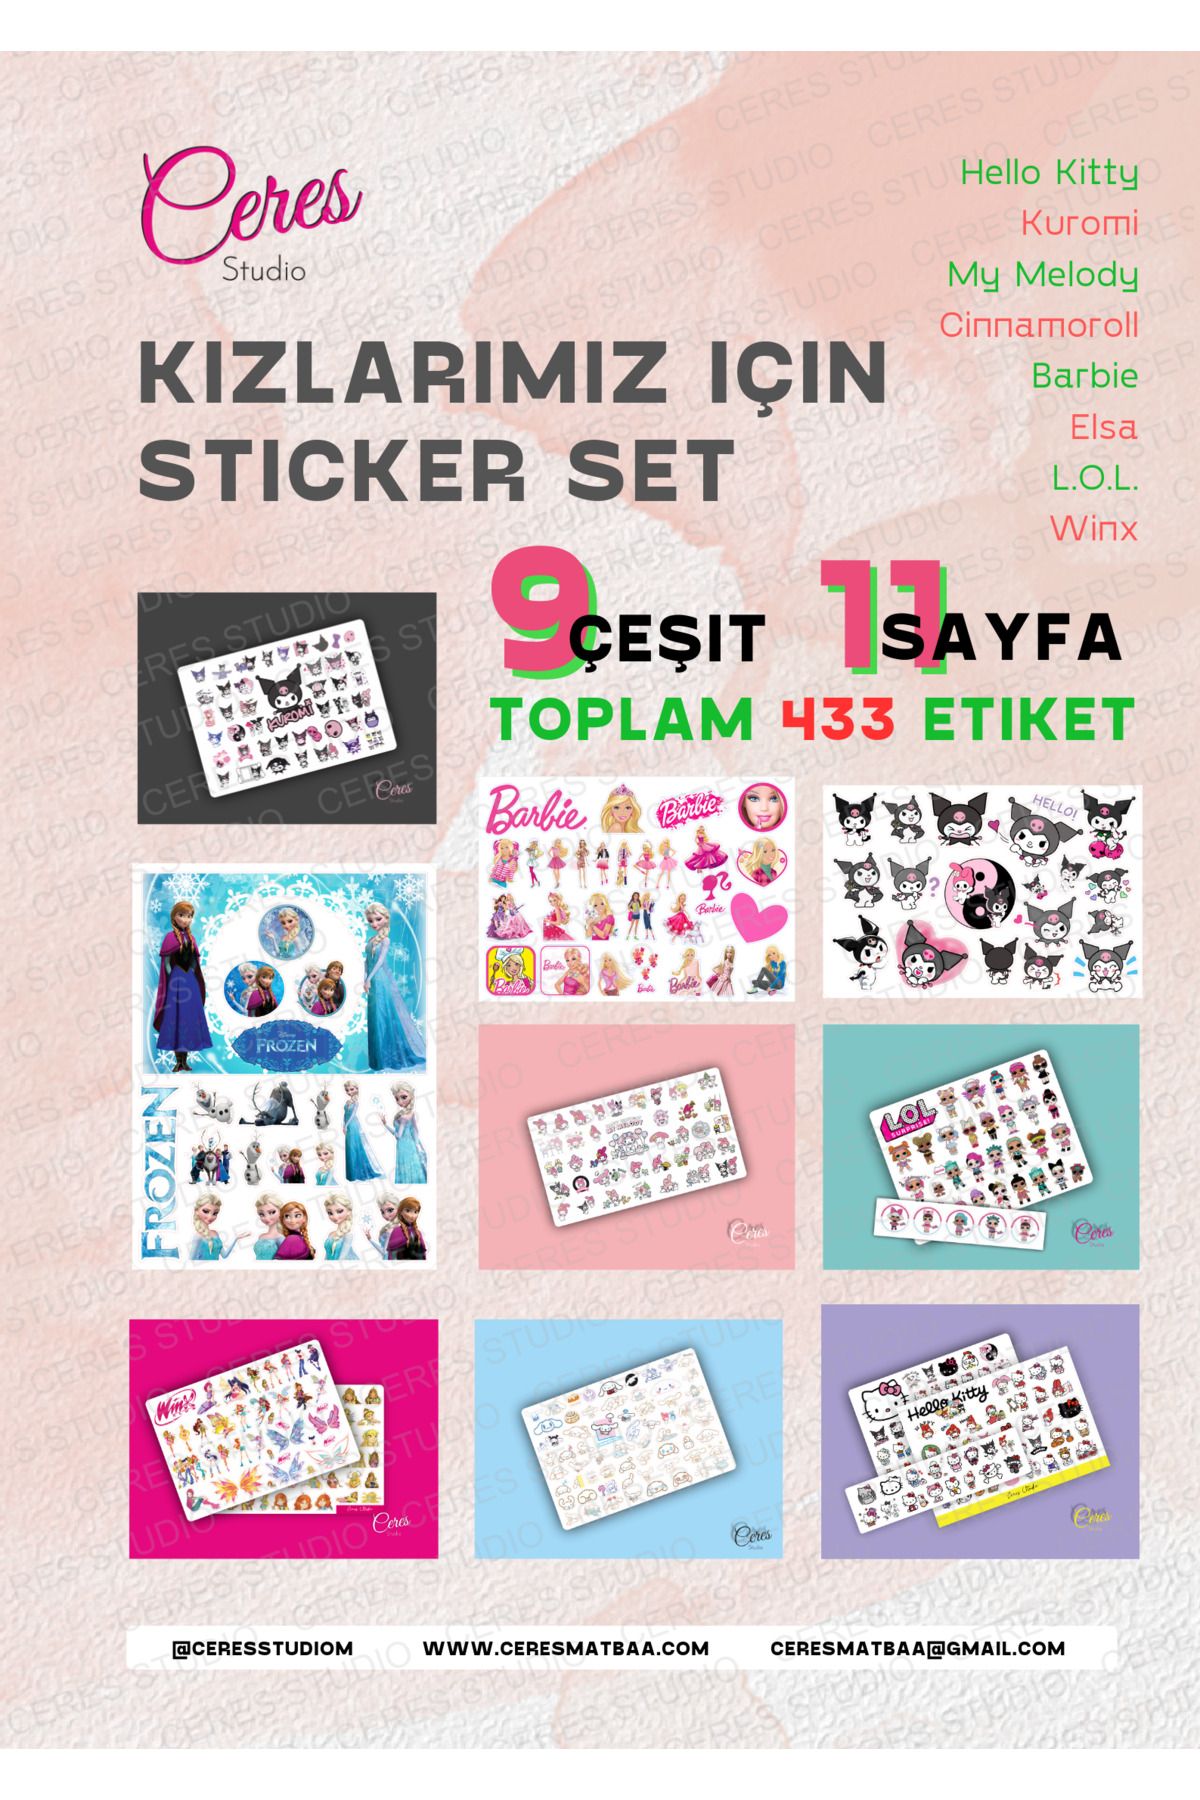 Ceres Studio Kızlar İçin Sticker Set 11 Syf 433 Etiket Hello Kitty Kuromi Cinnamoroll Melody Barbie Winx Elsa Lol